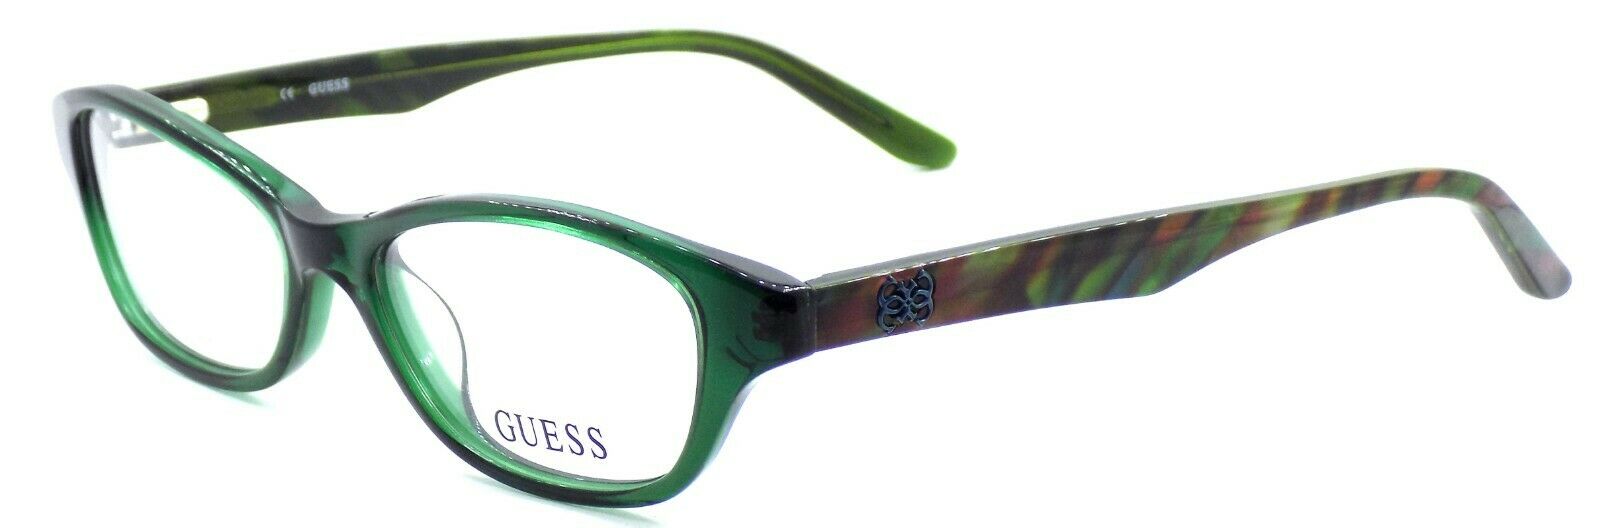 1-GUESS GU2417 GRN Women's Plastic Eyeglasses Frames 52-15-135 Green + CASE-715583960251-IKSpecs